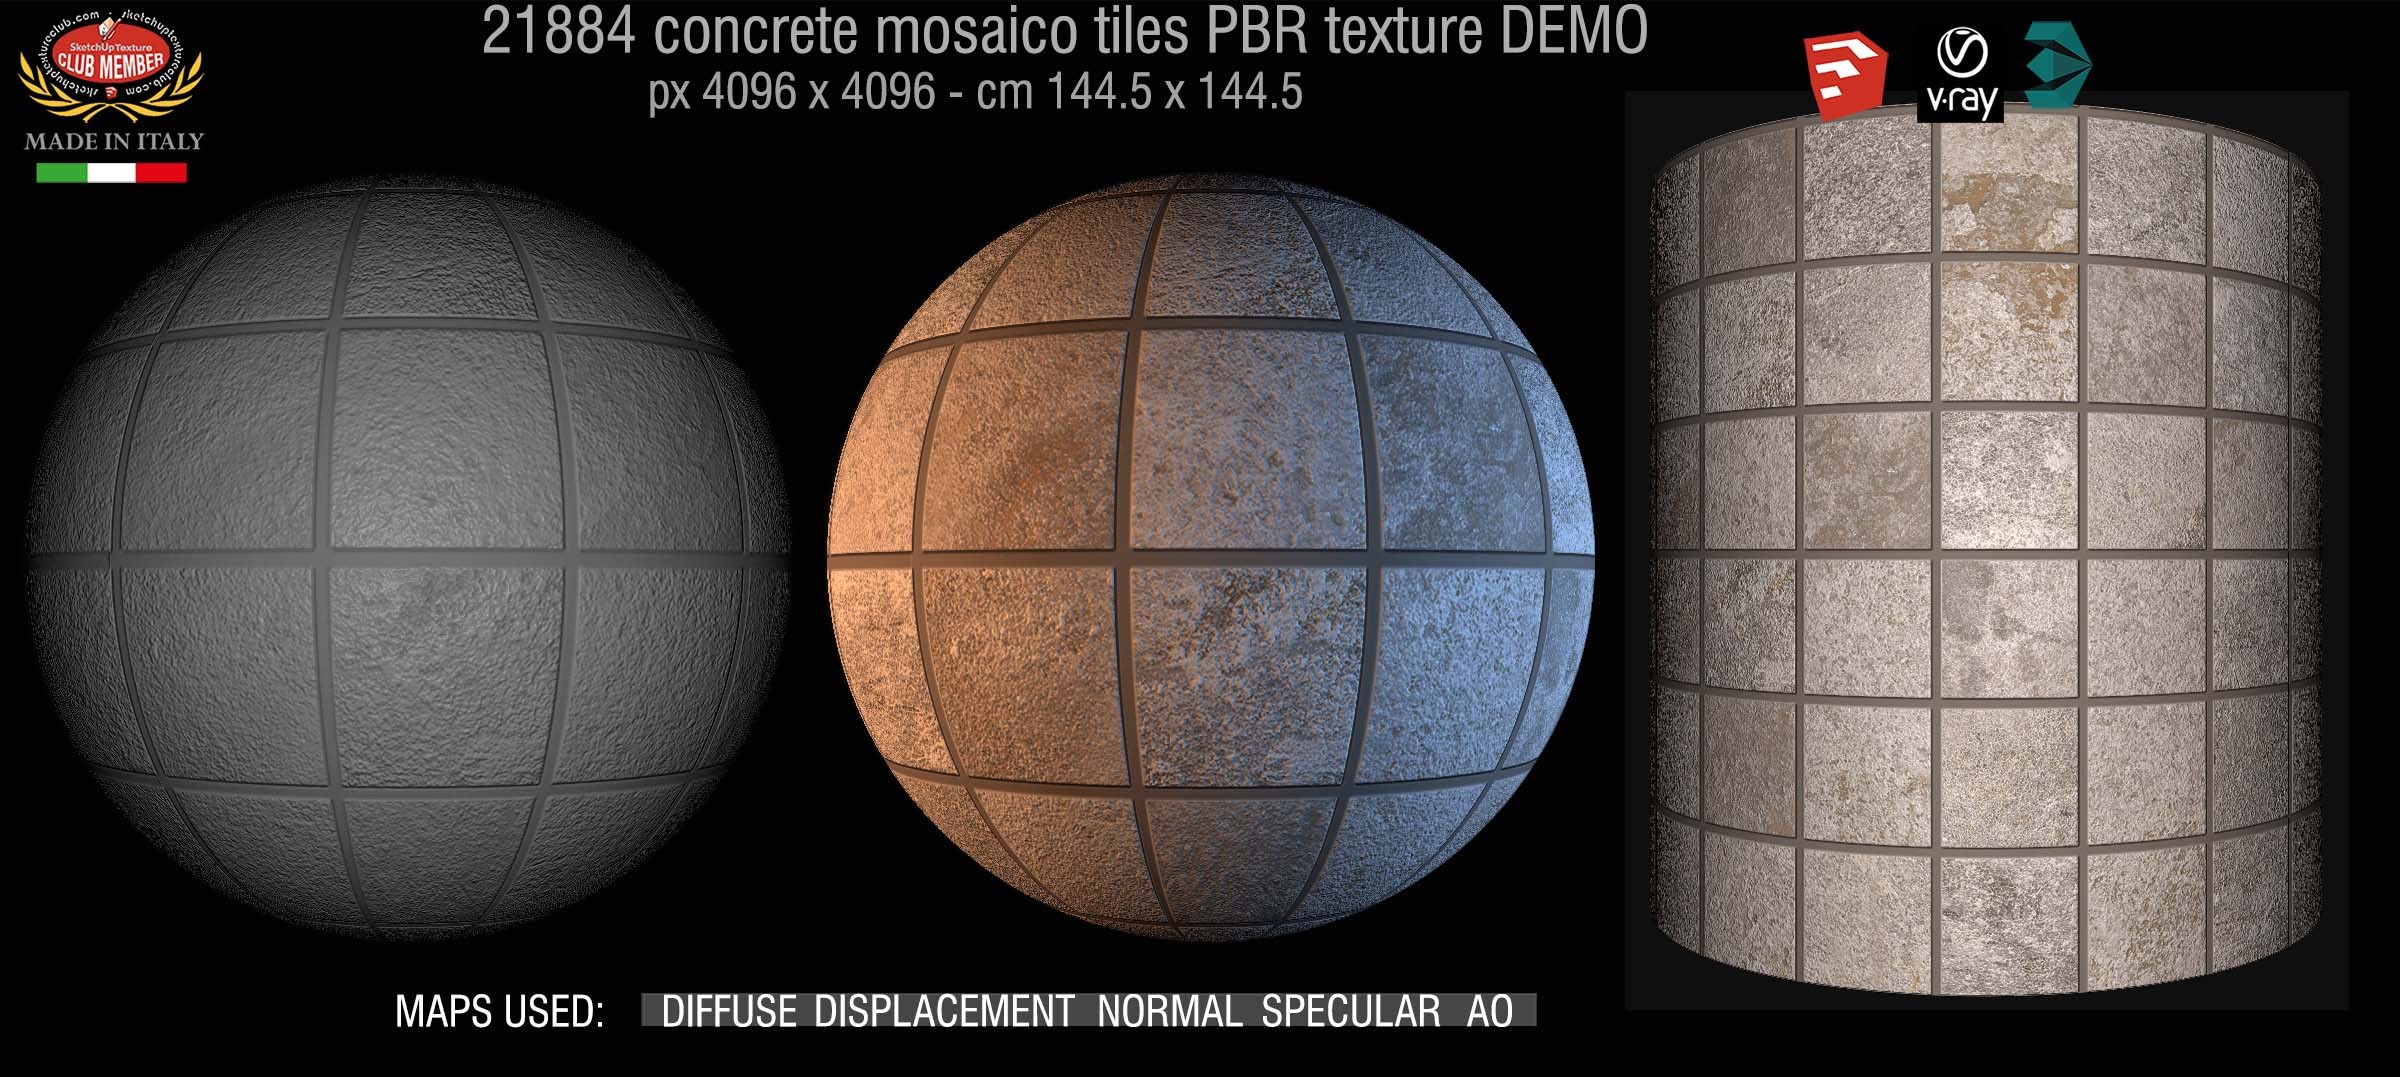 21884 Concrete mosaico tiles PBR texture seamless DEMO